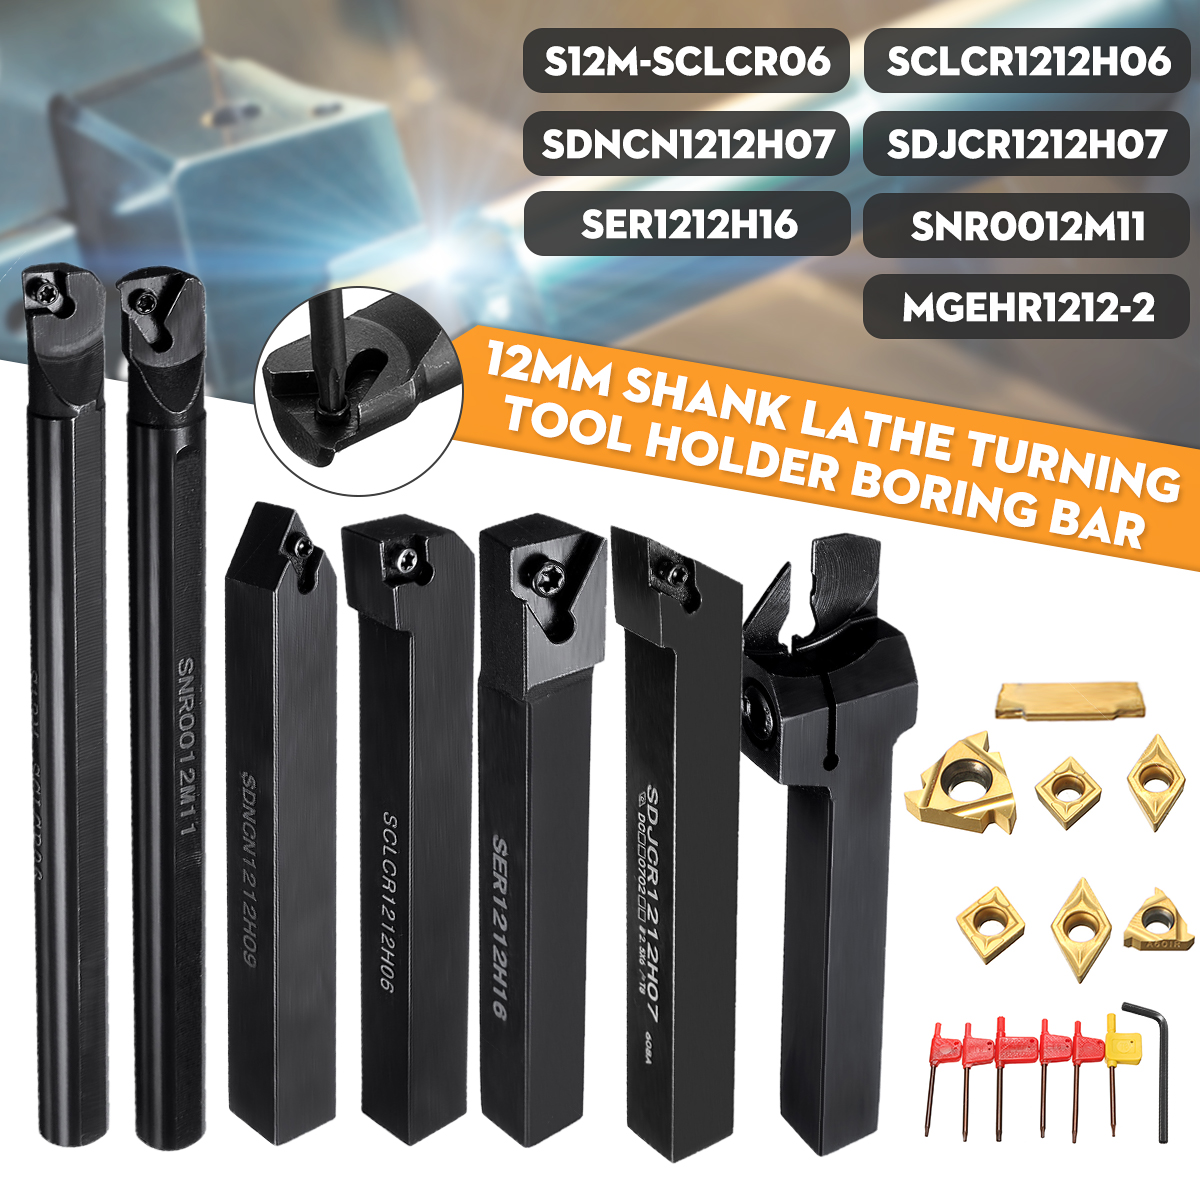 Machifit-7pcs-12mm-Shank-Lathe-Boring-Bar-Turning-Tool-Holder-Set-with-Carbide-Inserts-1102496-1